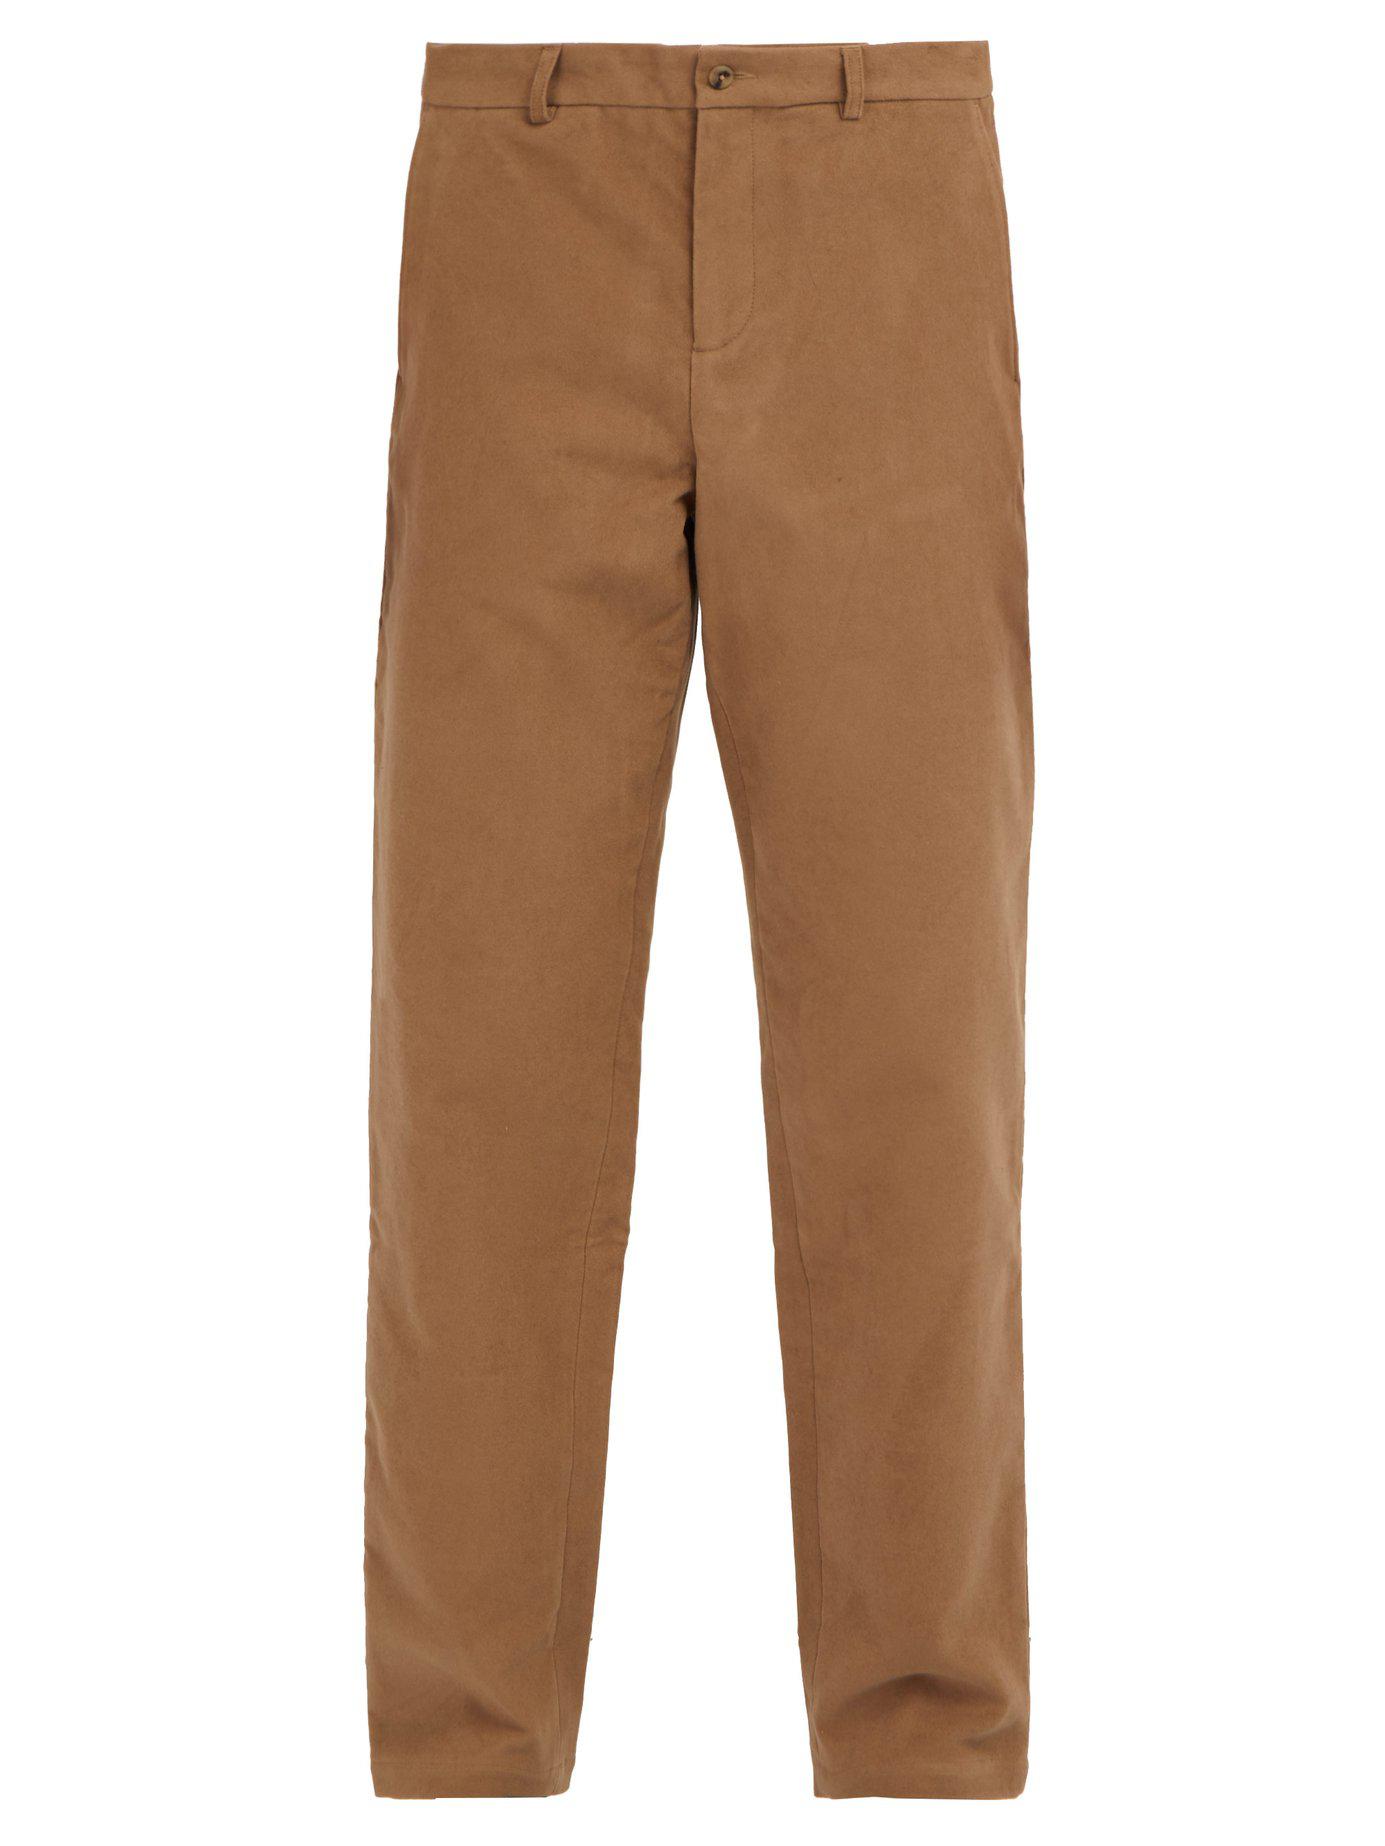 Lyst - De Bonne Facture English Moleskin Trousers in Brown for Men